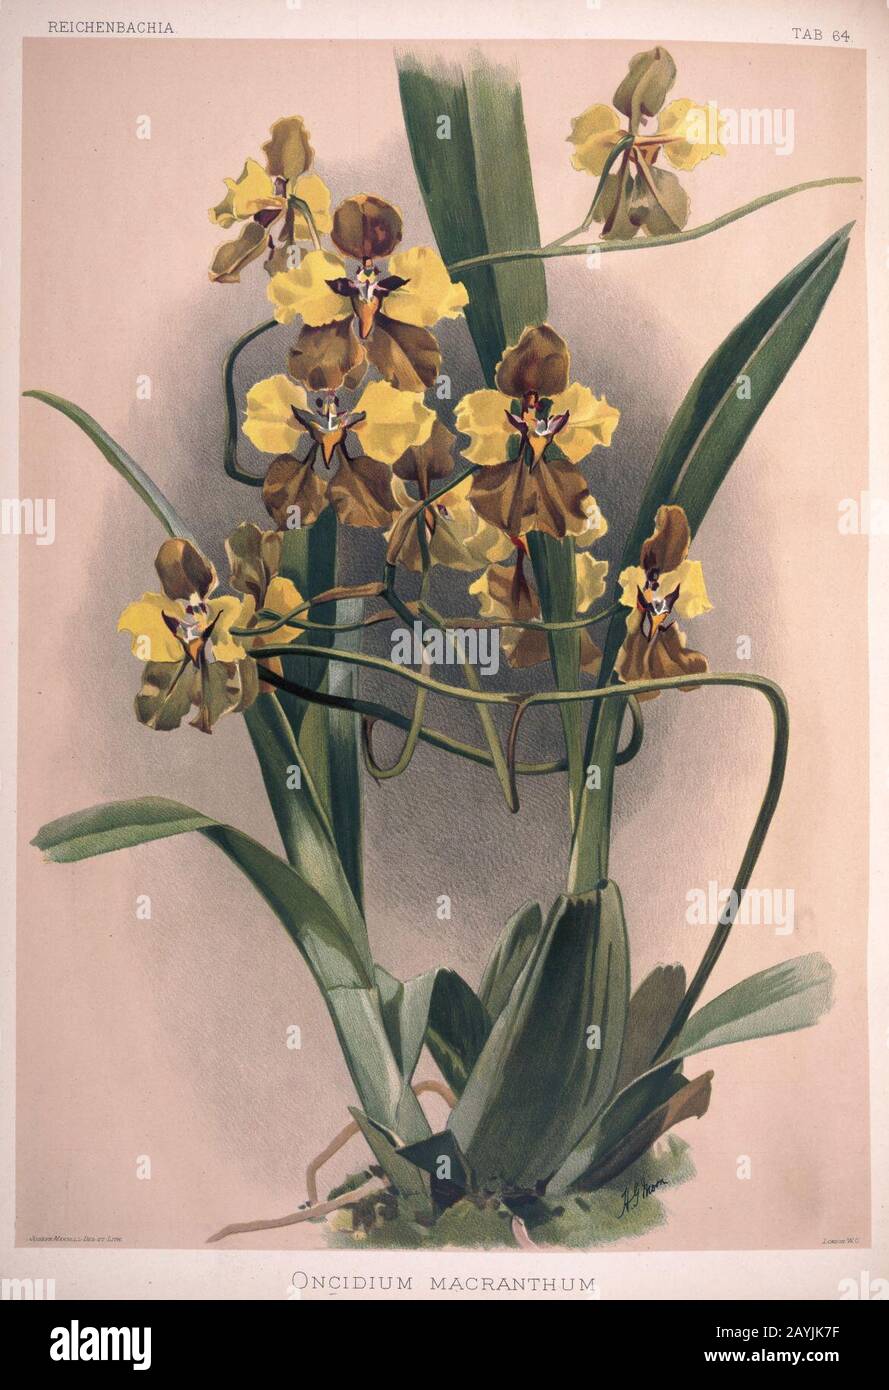 Frederick Sander - Reichenbachia II plate 64 (1890) - Oncidium macranthum. Stock Photo